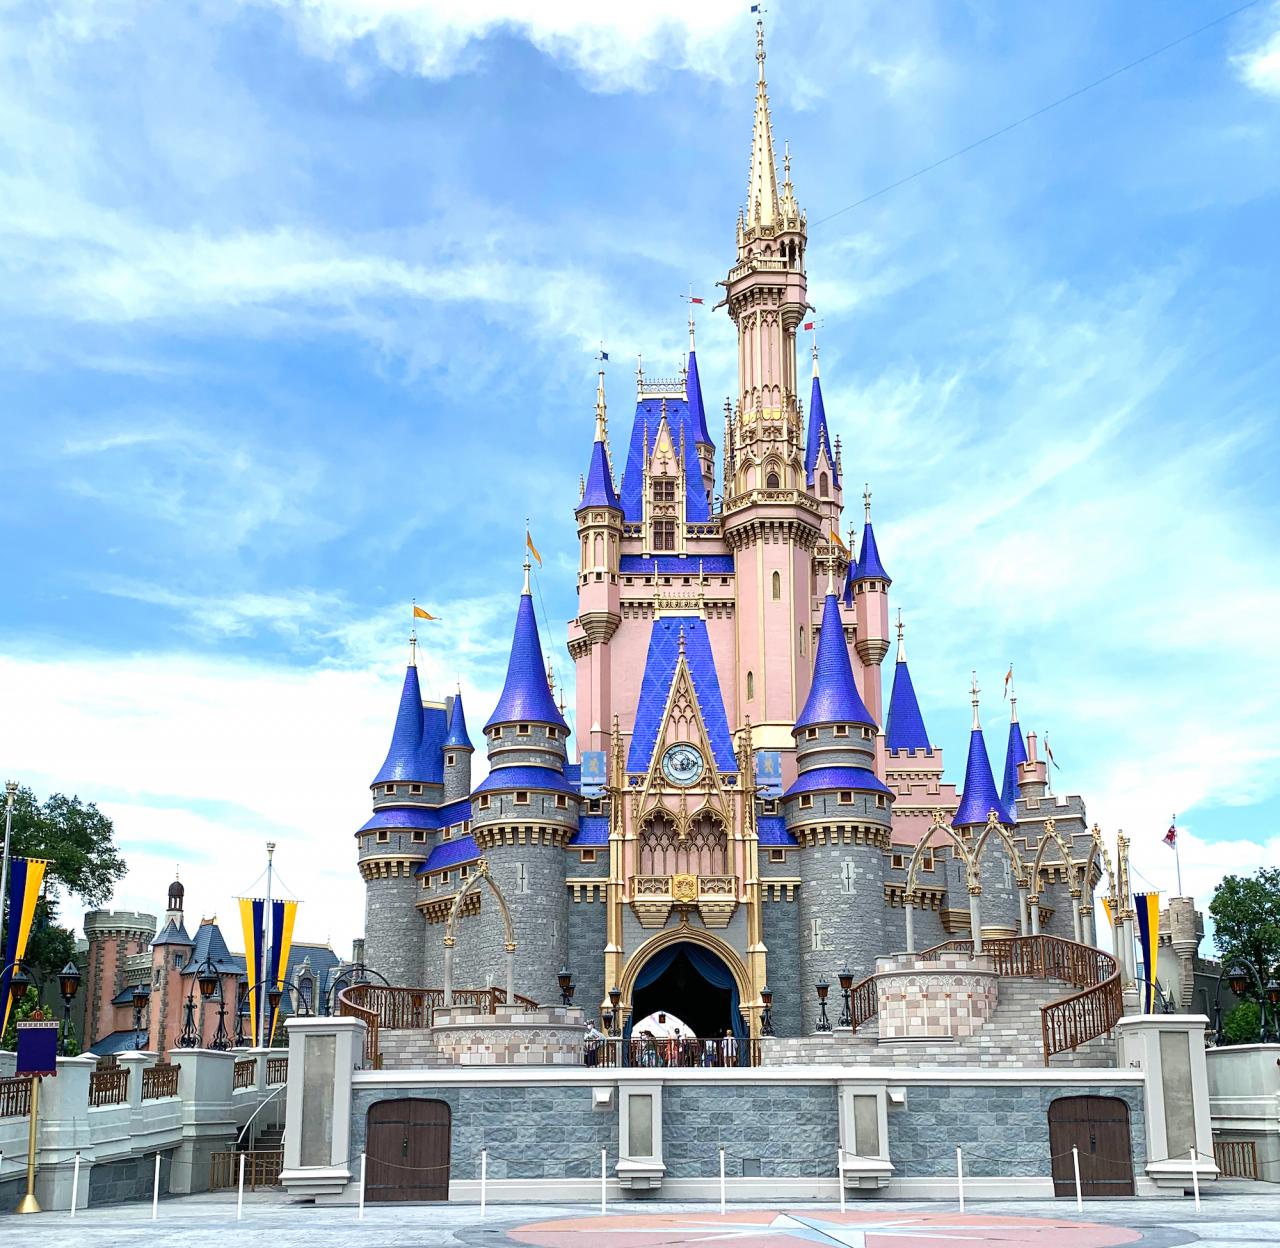 Magical Cinderella's Castle